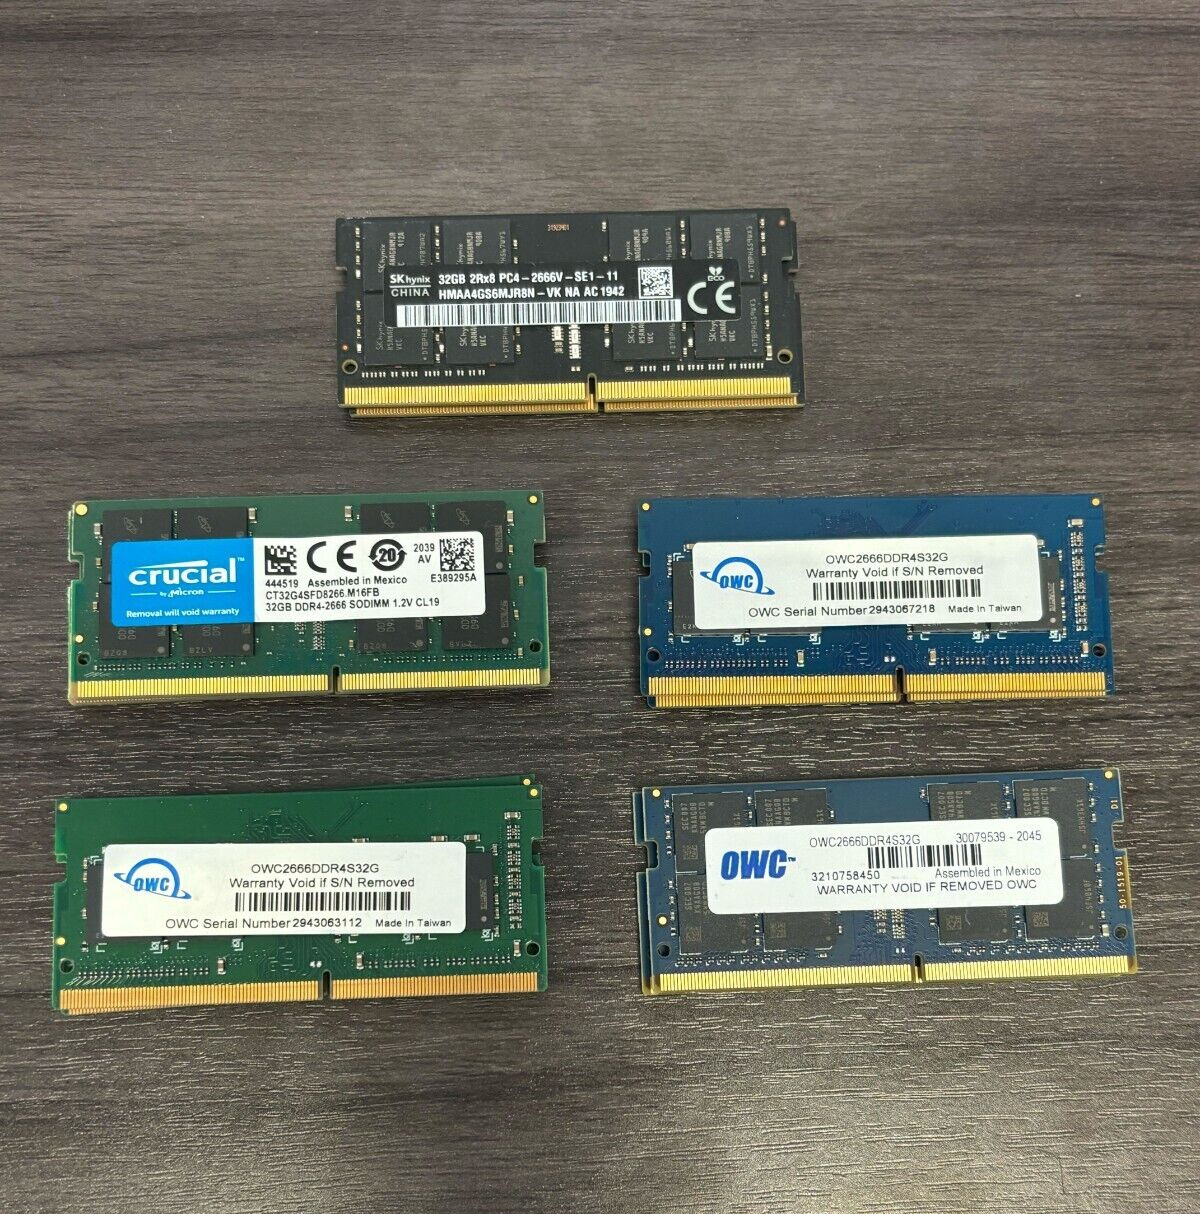 Lot of 2 32GB DDR4 2666 PC4-21300 SODIMM RAM Modules Mixed Brand